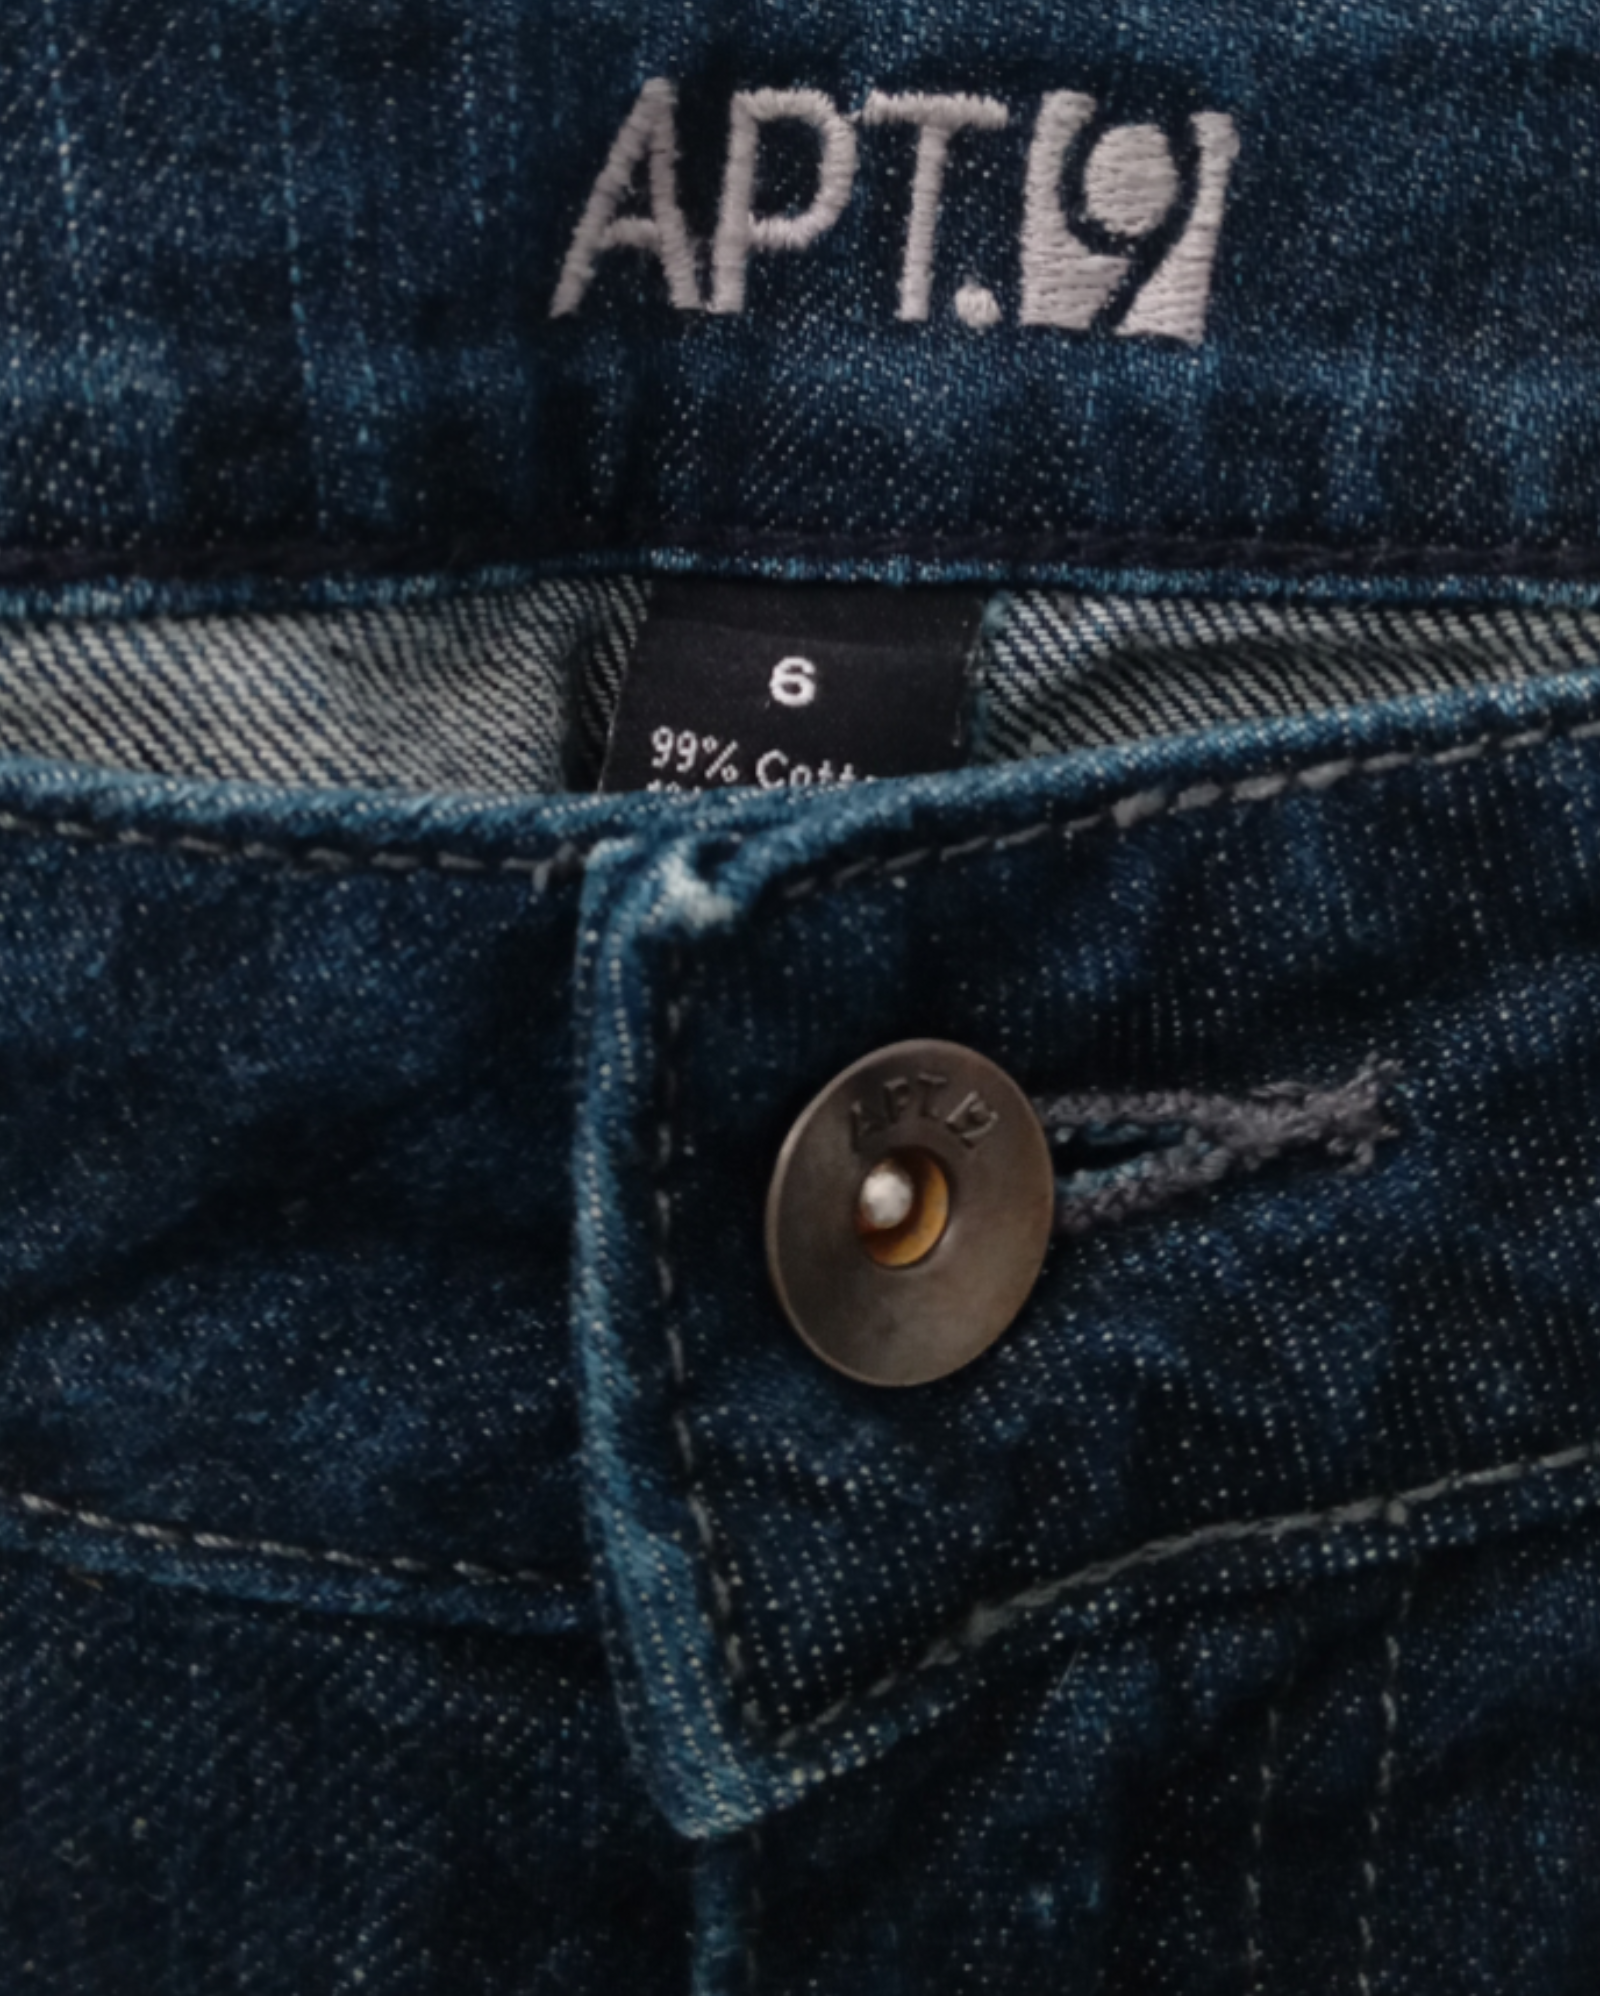 Jeans Rectos APT.9